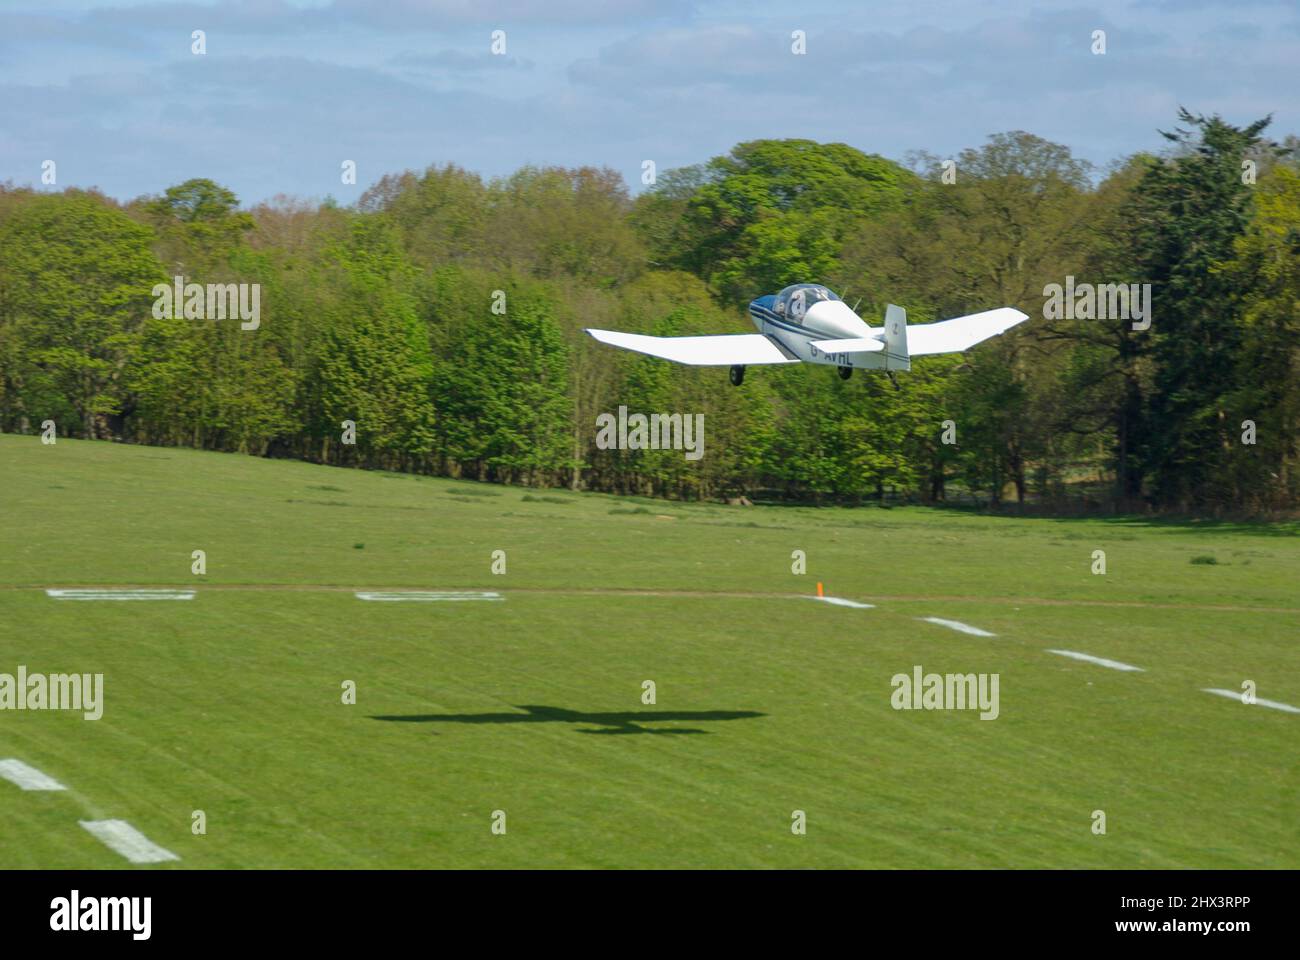 Jodel DR-105A Ambassadeur plane G-AVHL taking off from Henham Park countryside grass strip. Tree lined Suffolk grass runway on sunny day Stock Photo